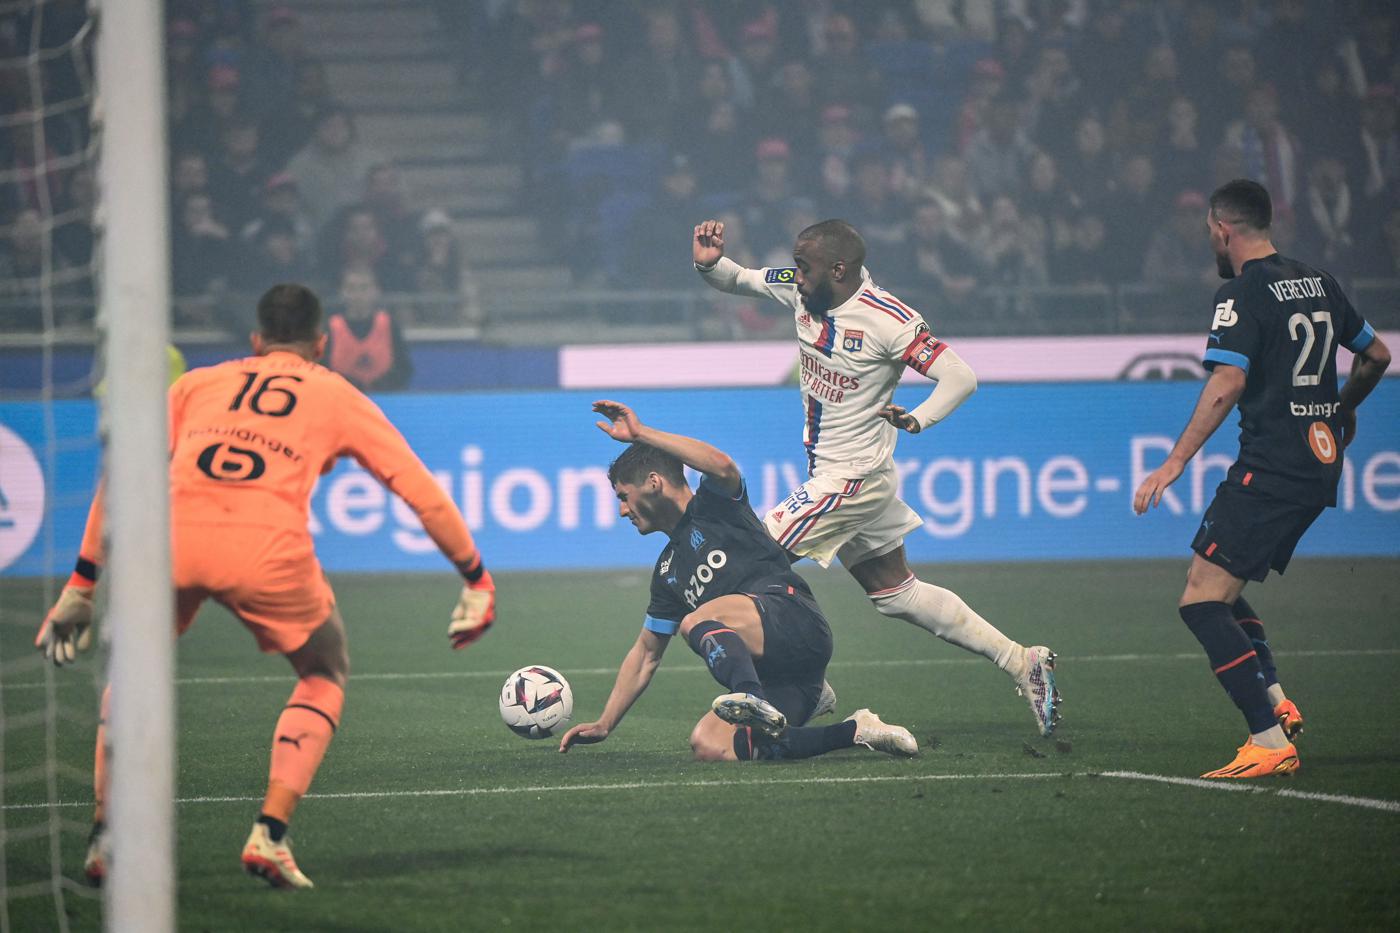 Lyon v Marseille - 1:2. French Championship, round of 32. Match review, statistics.